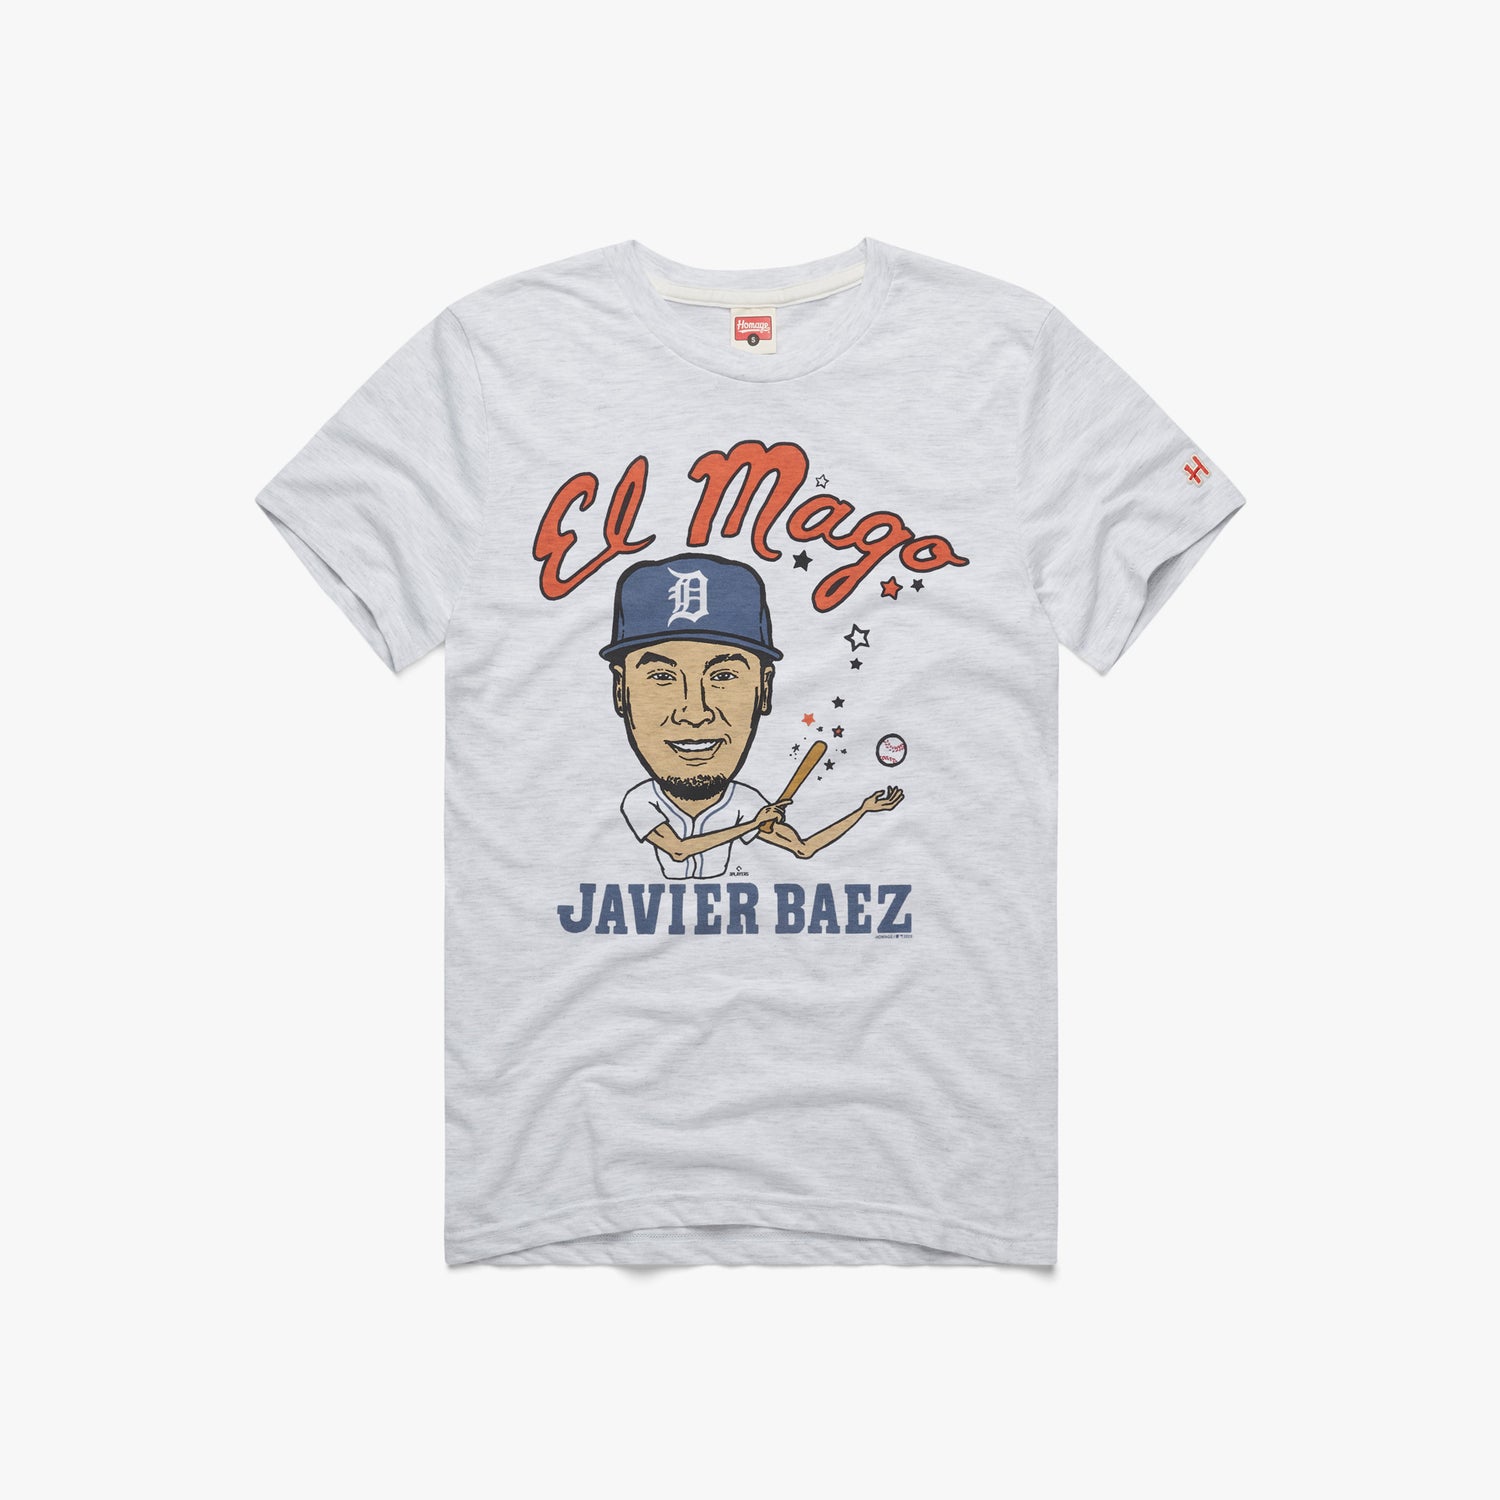 DeepLeftDesign Javier Baez El Mago Youth T-Shirt